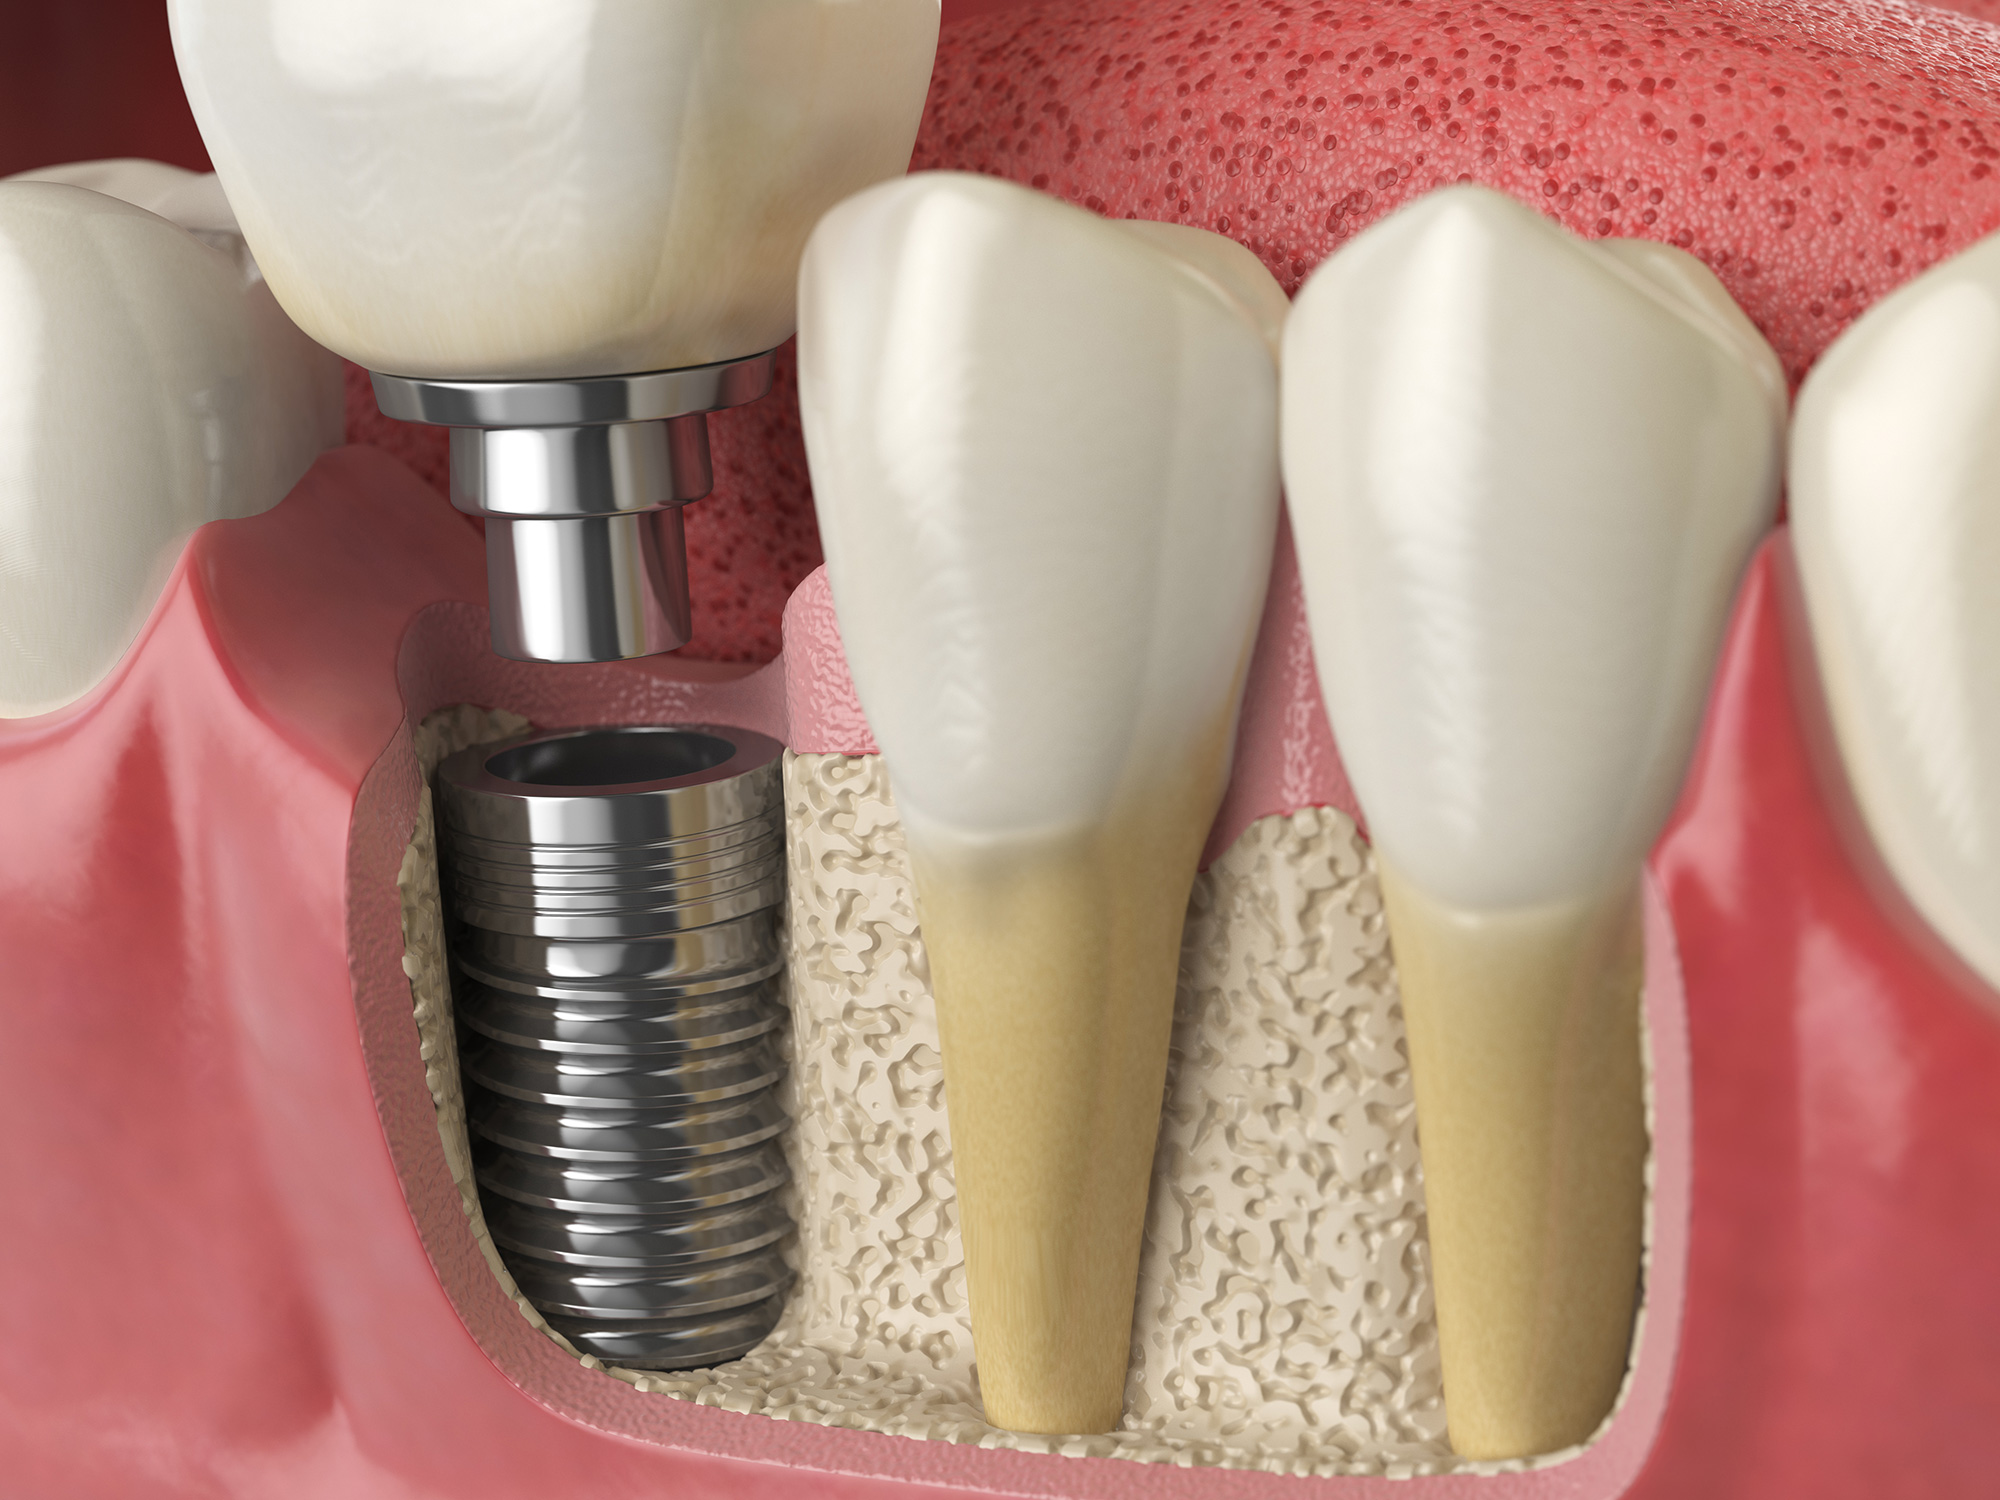 Dental implants Pensacola Periodontics and Implant Dentistry Pensacola, FL